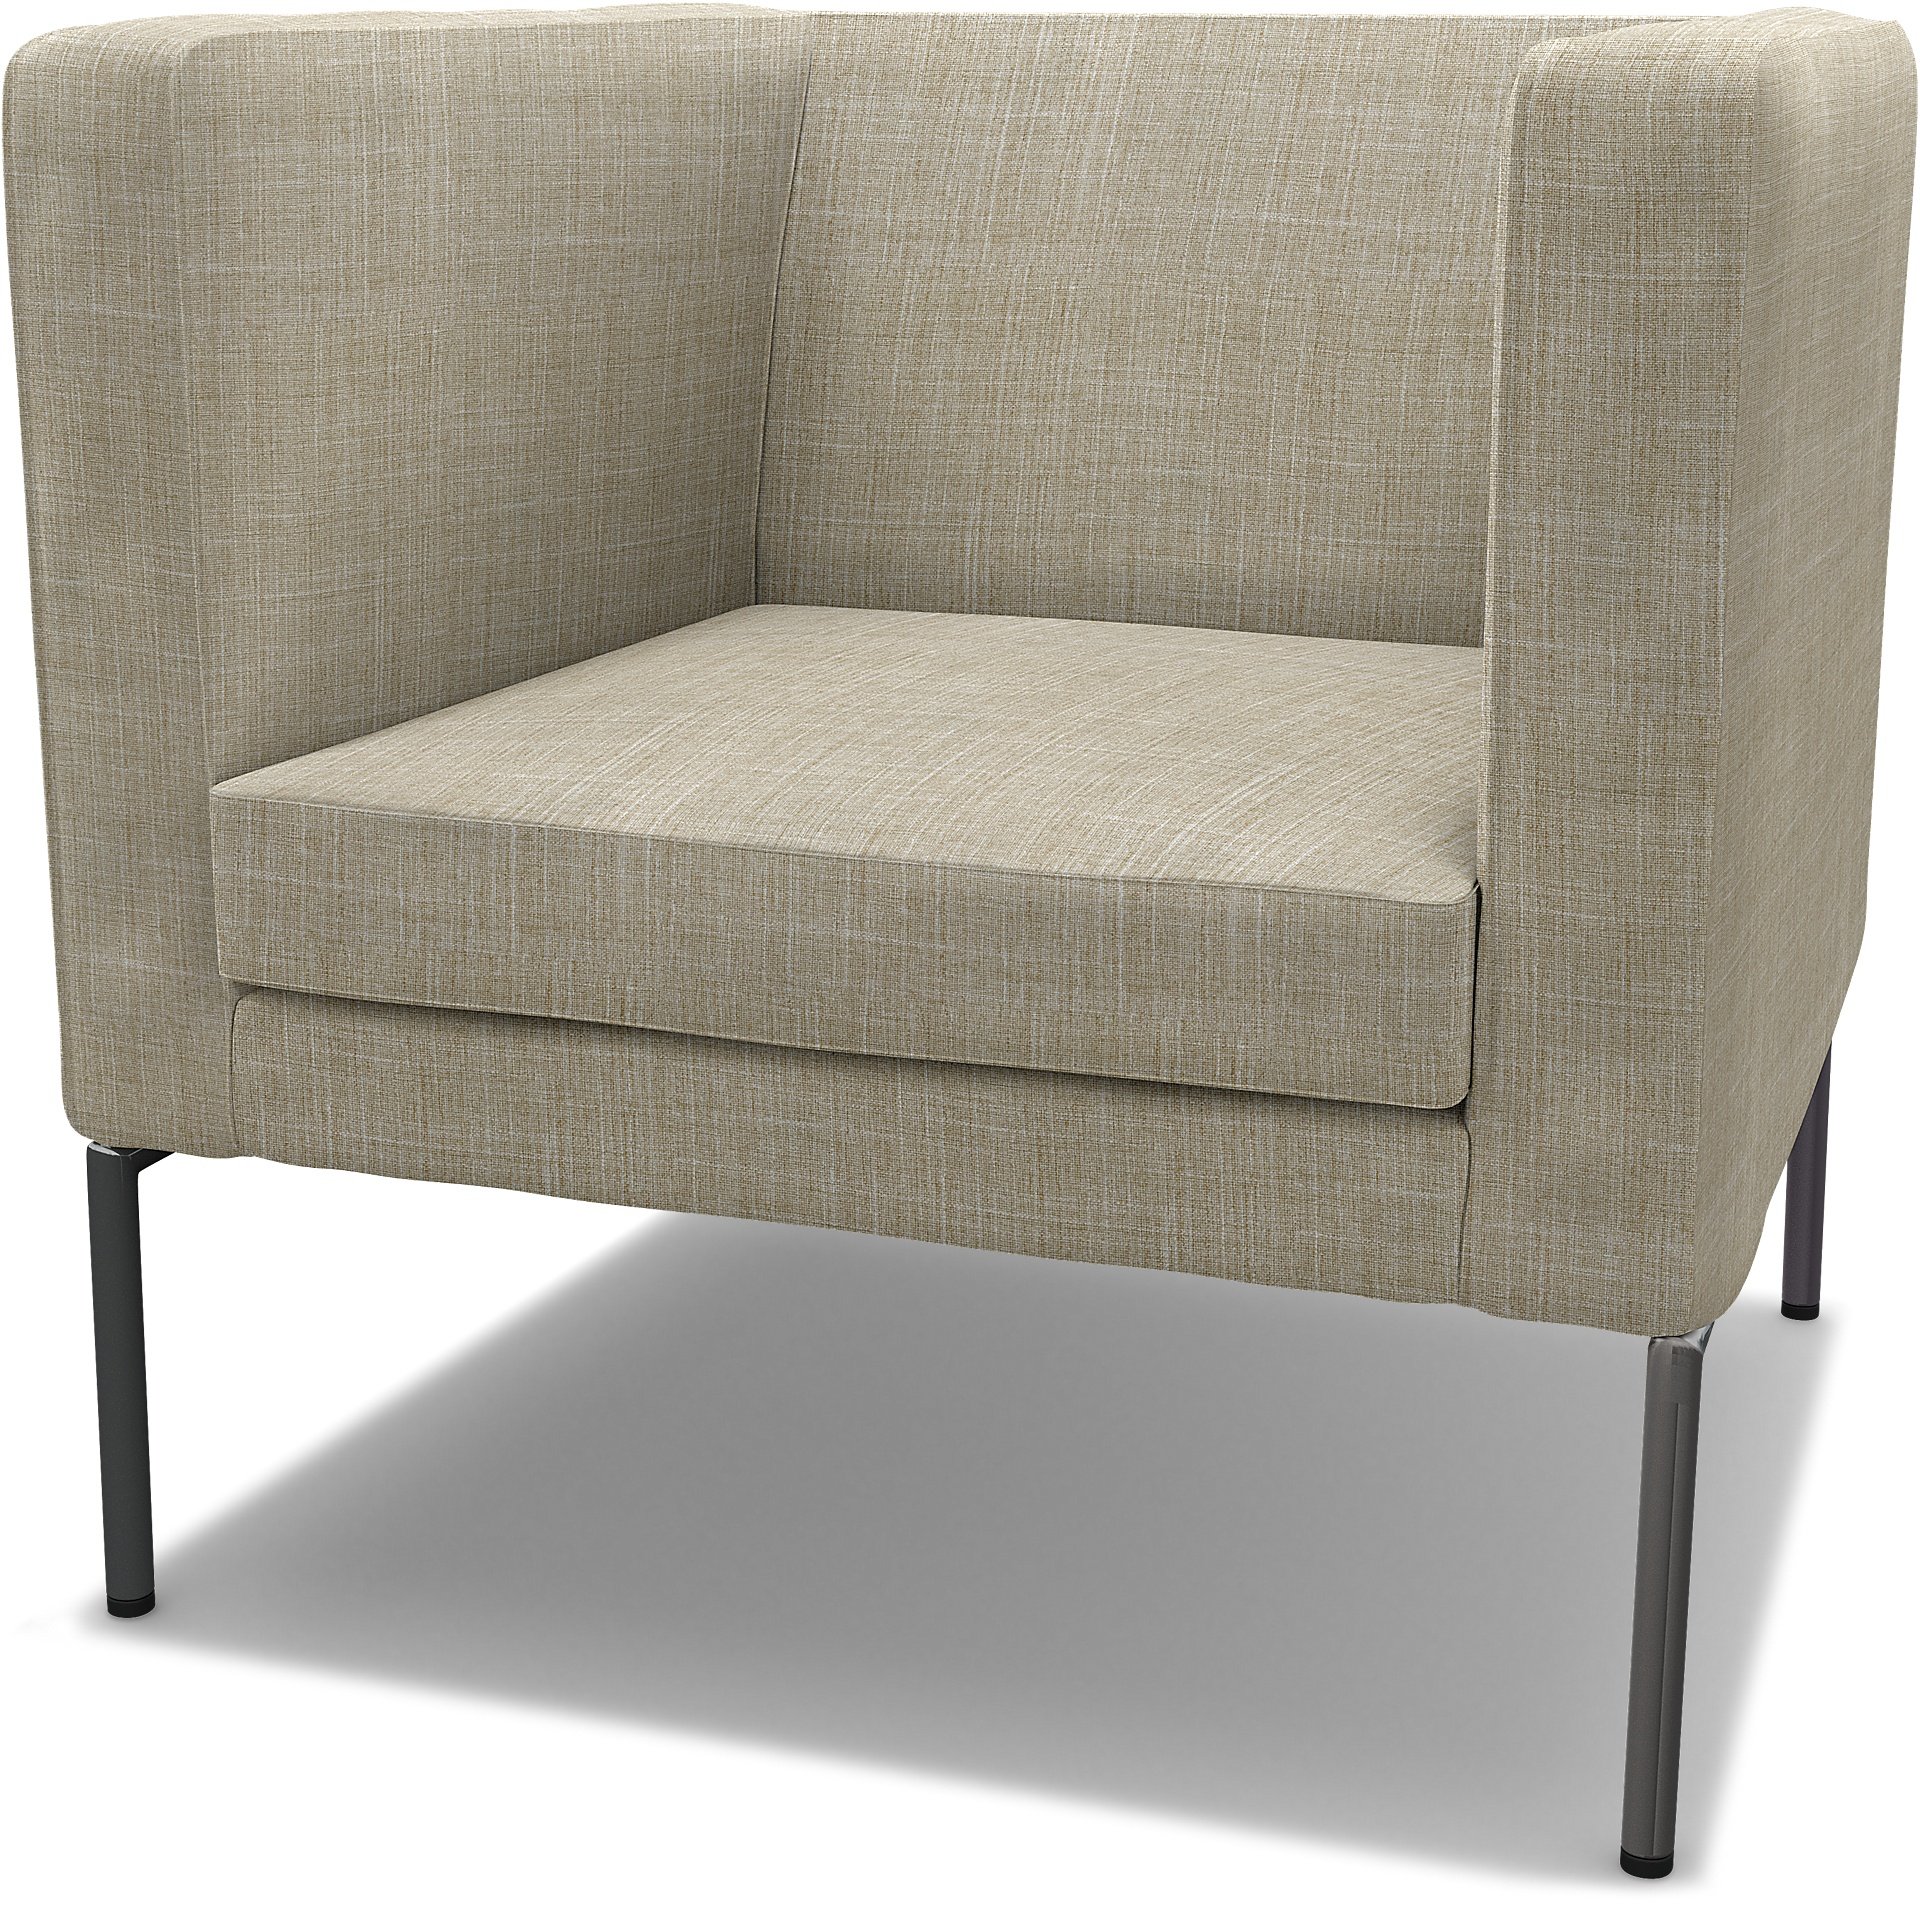 IKEA - Klappsta Armchair Cover, Sand Beige, Boucle & Texture - Bemz